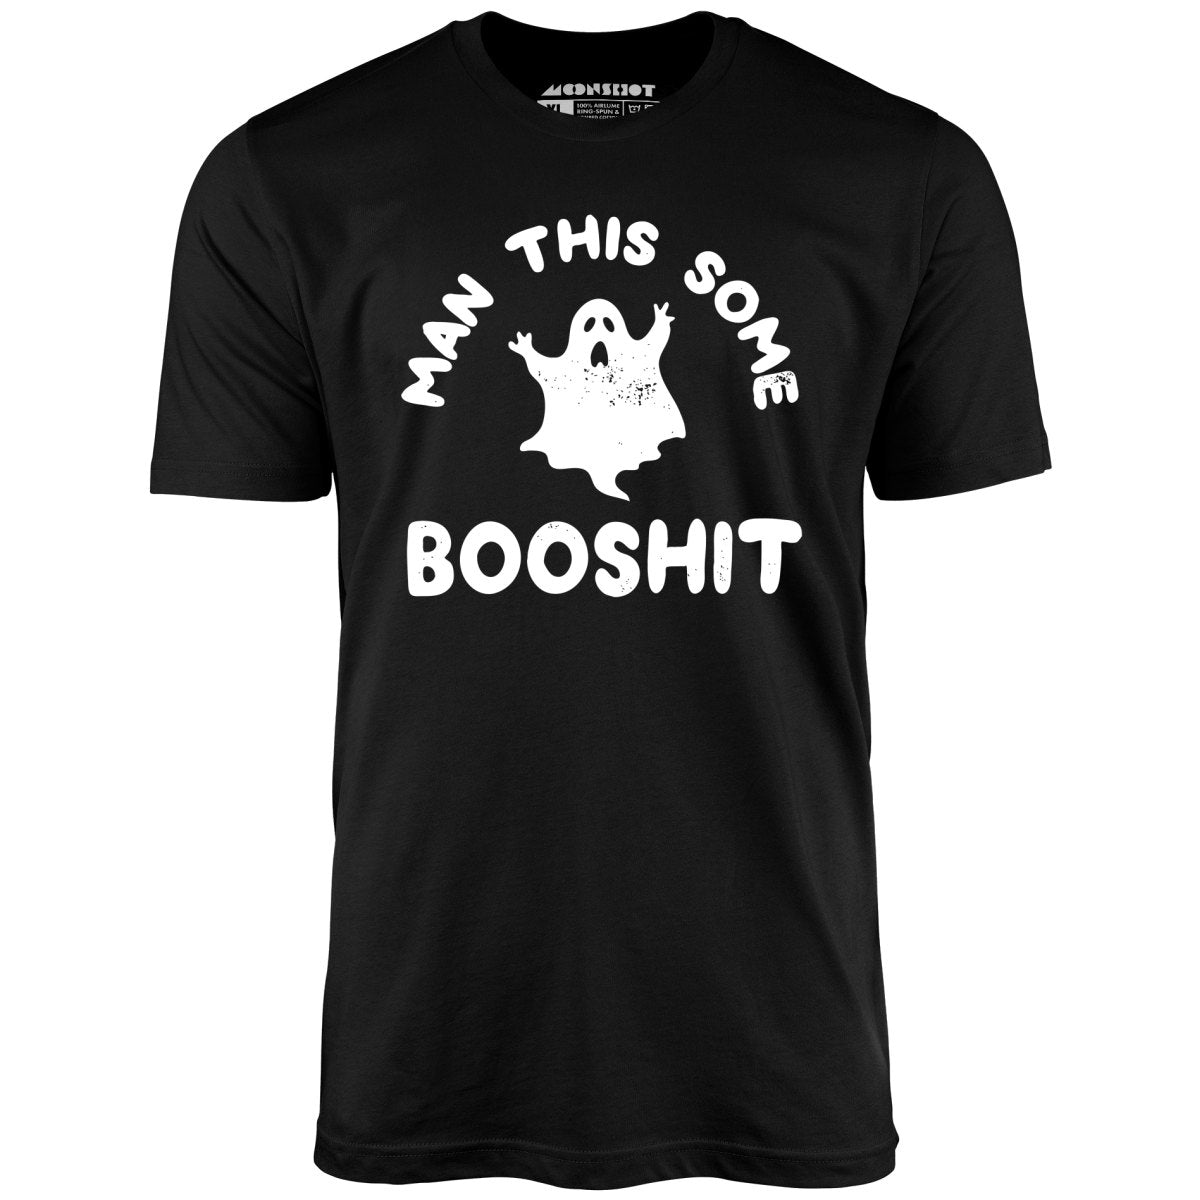 Man This Some Booshit - Unisex T-Shirt